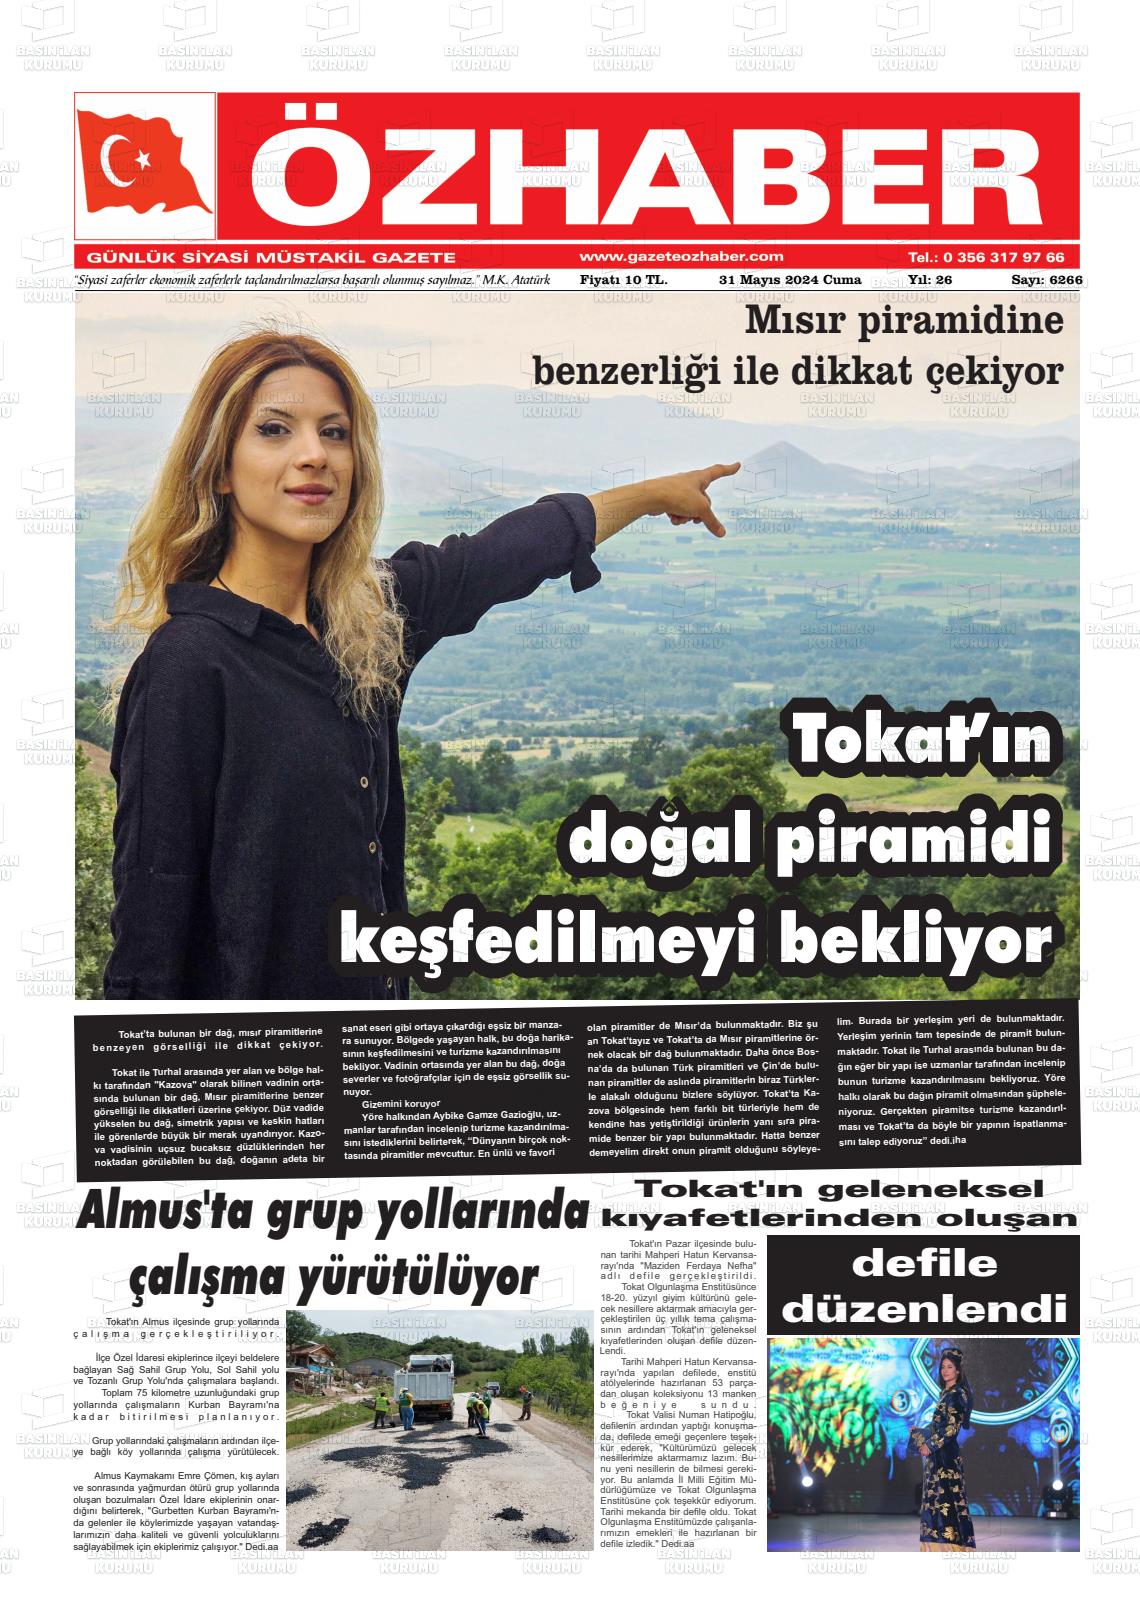 ÖZHABER Gazetesi